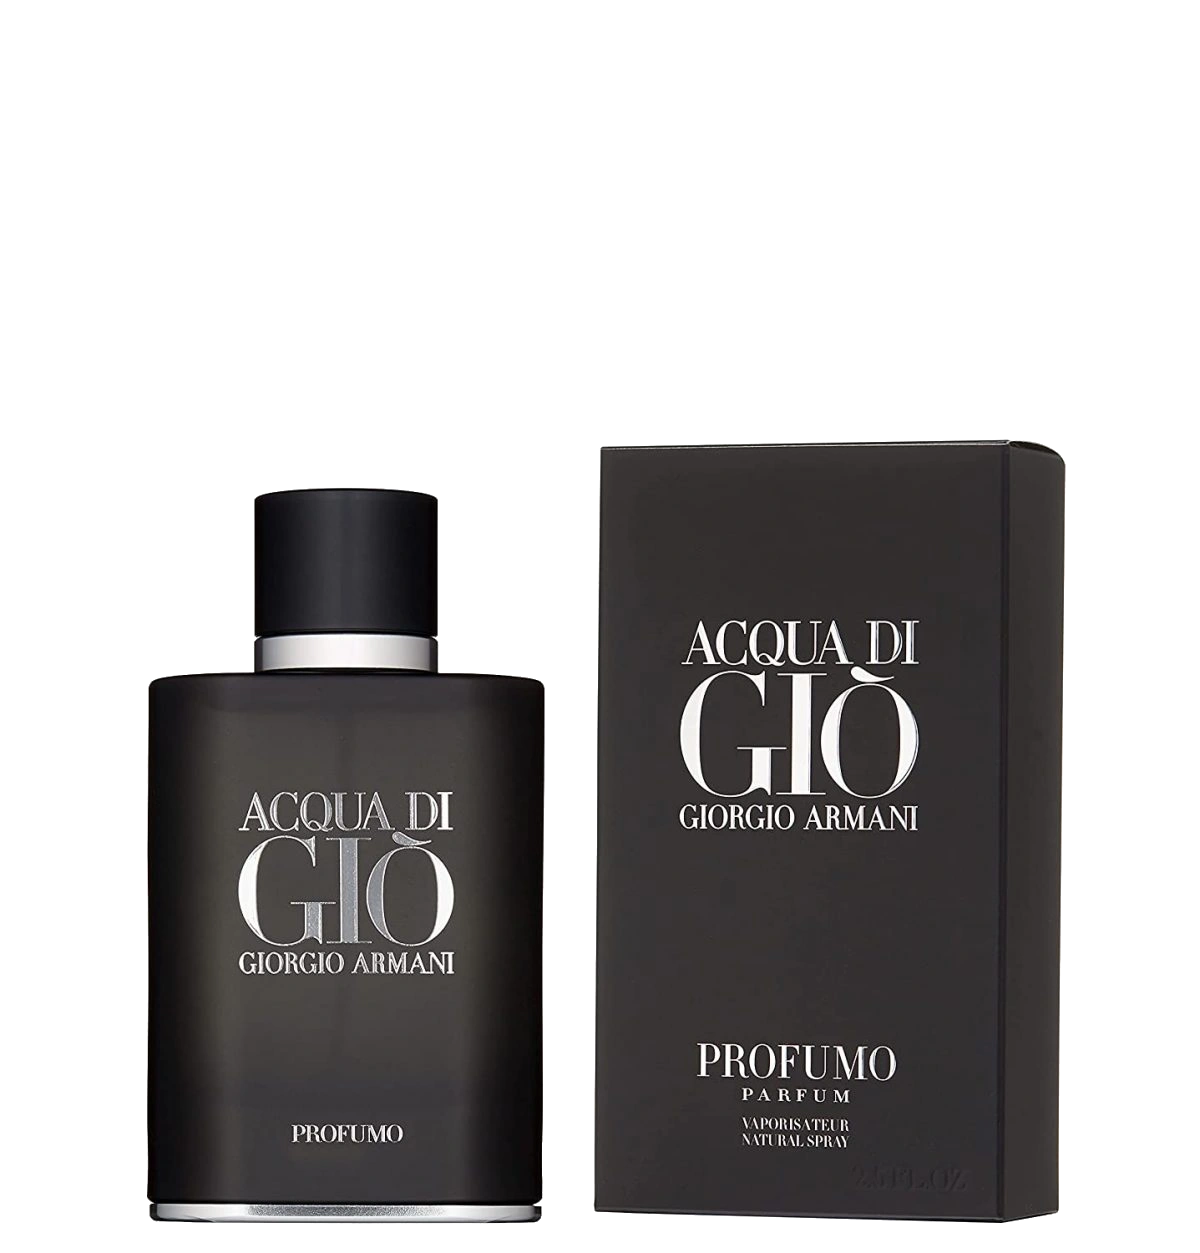 Close-up of a Giorgio Armani Acqua di Giò Profumo perfume bottle, highlighting its sleek design and luxurious appeal.